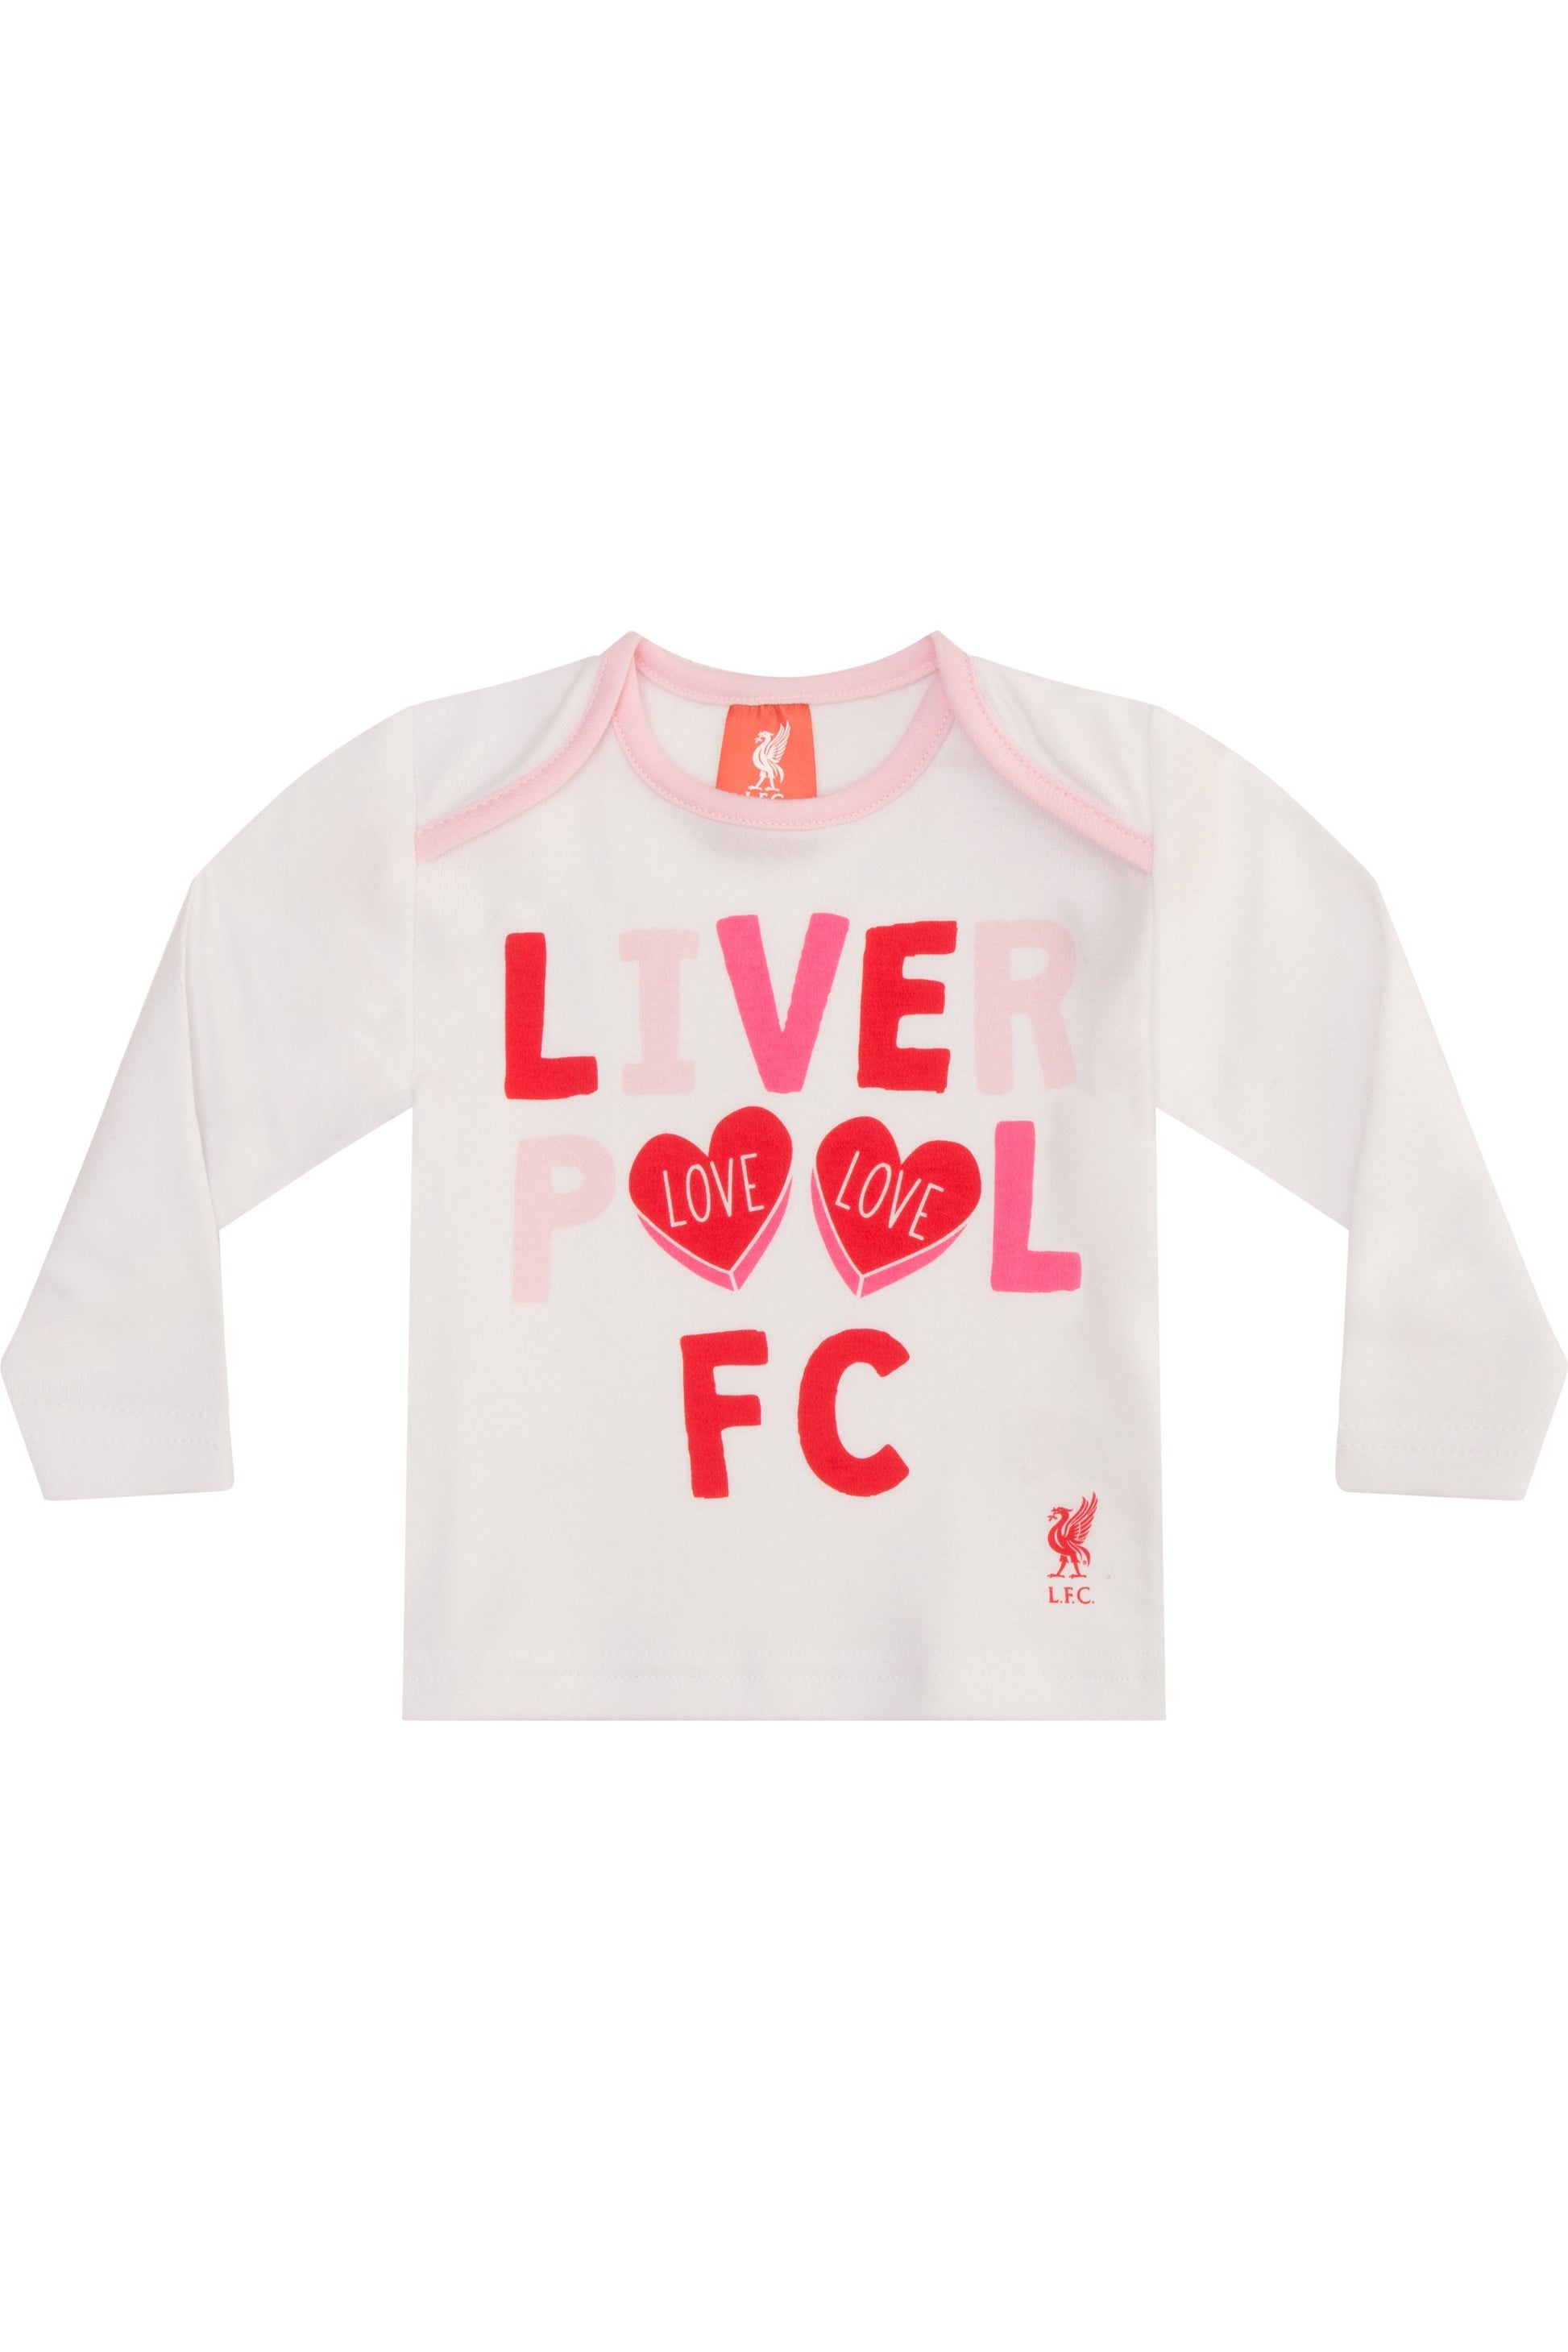 Liverpool FC Pink Long Pyjamas - Pyjamas.com